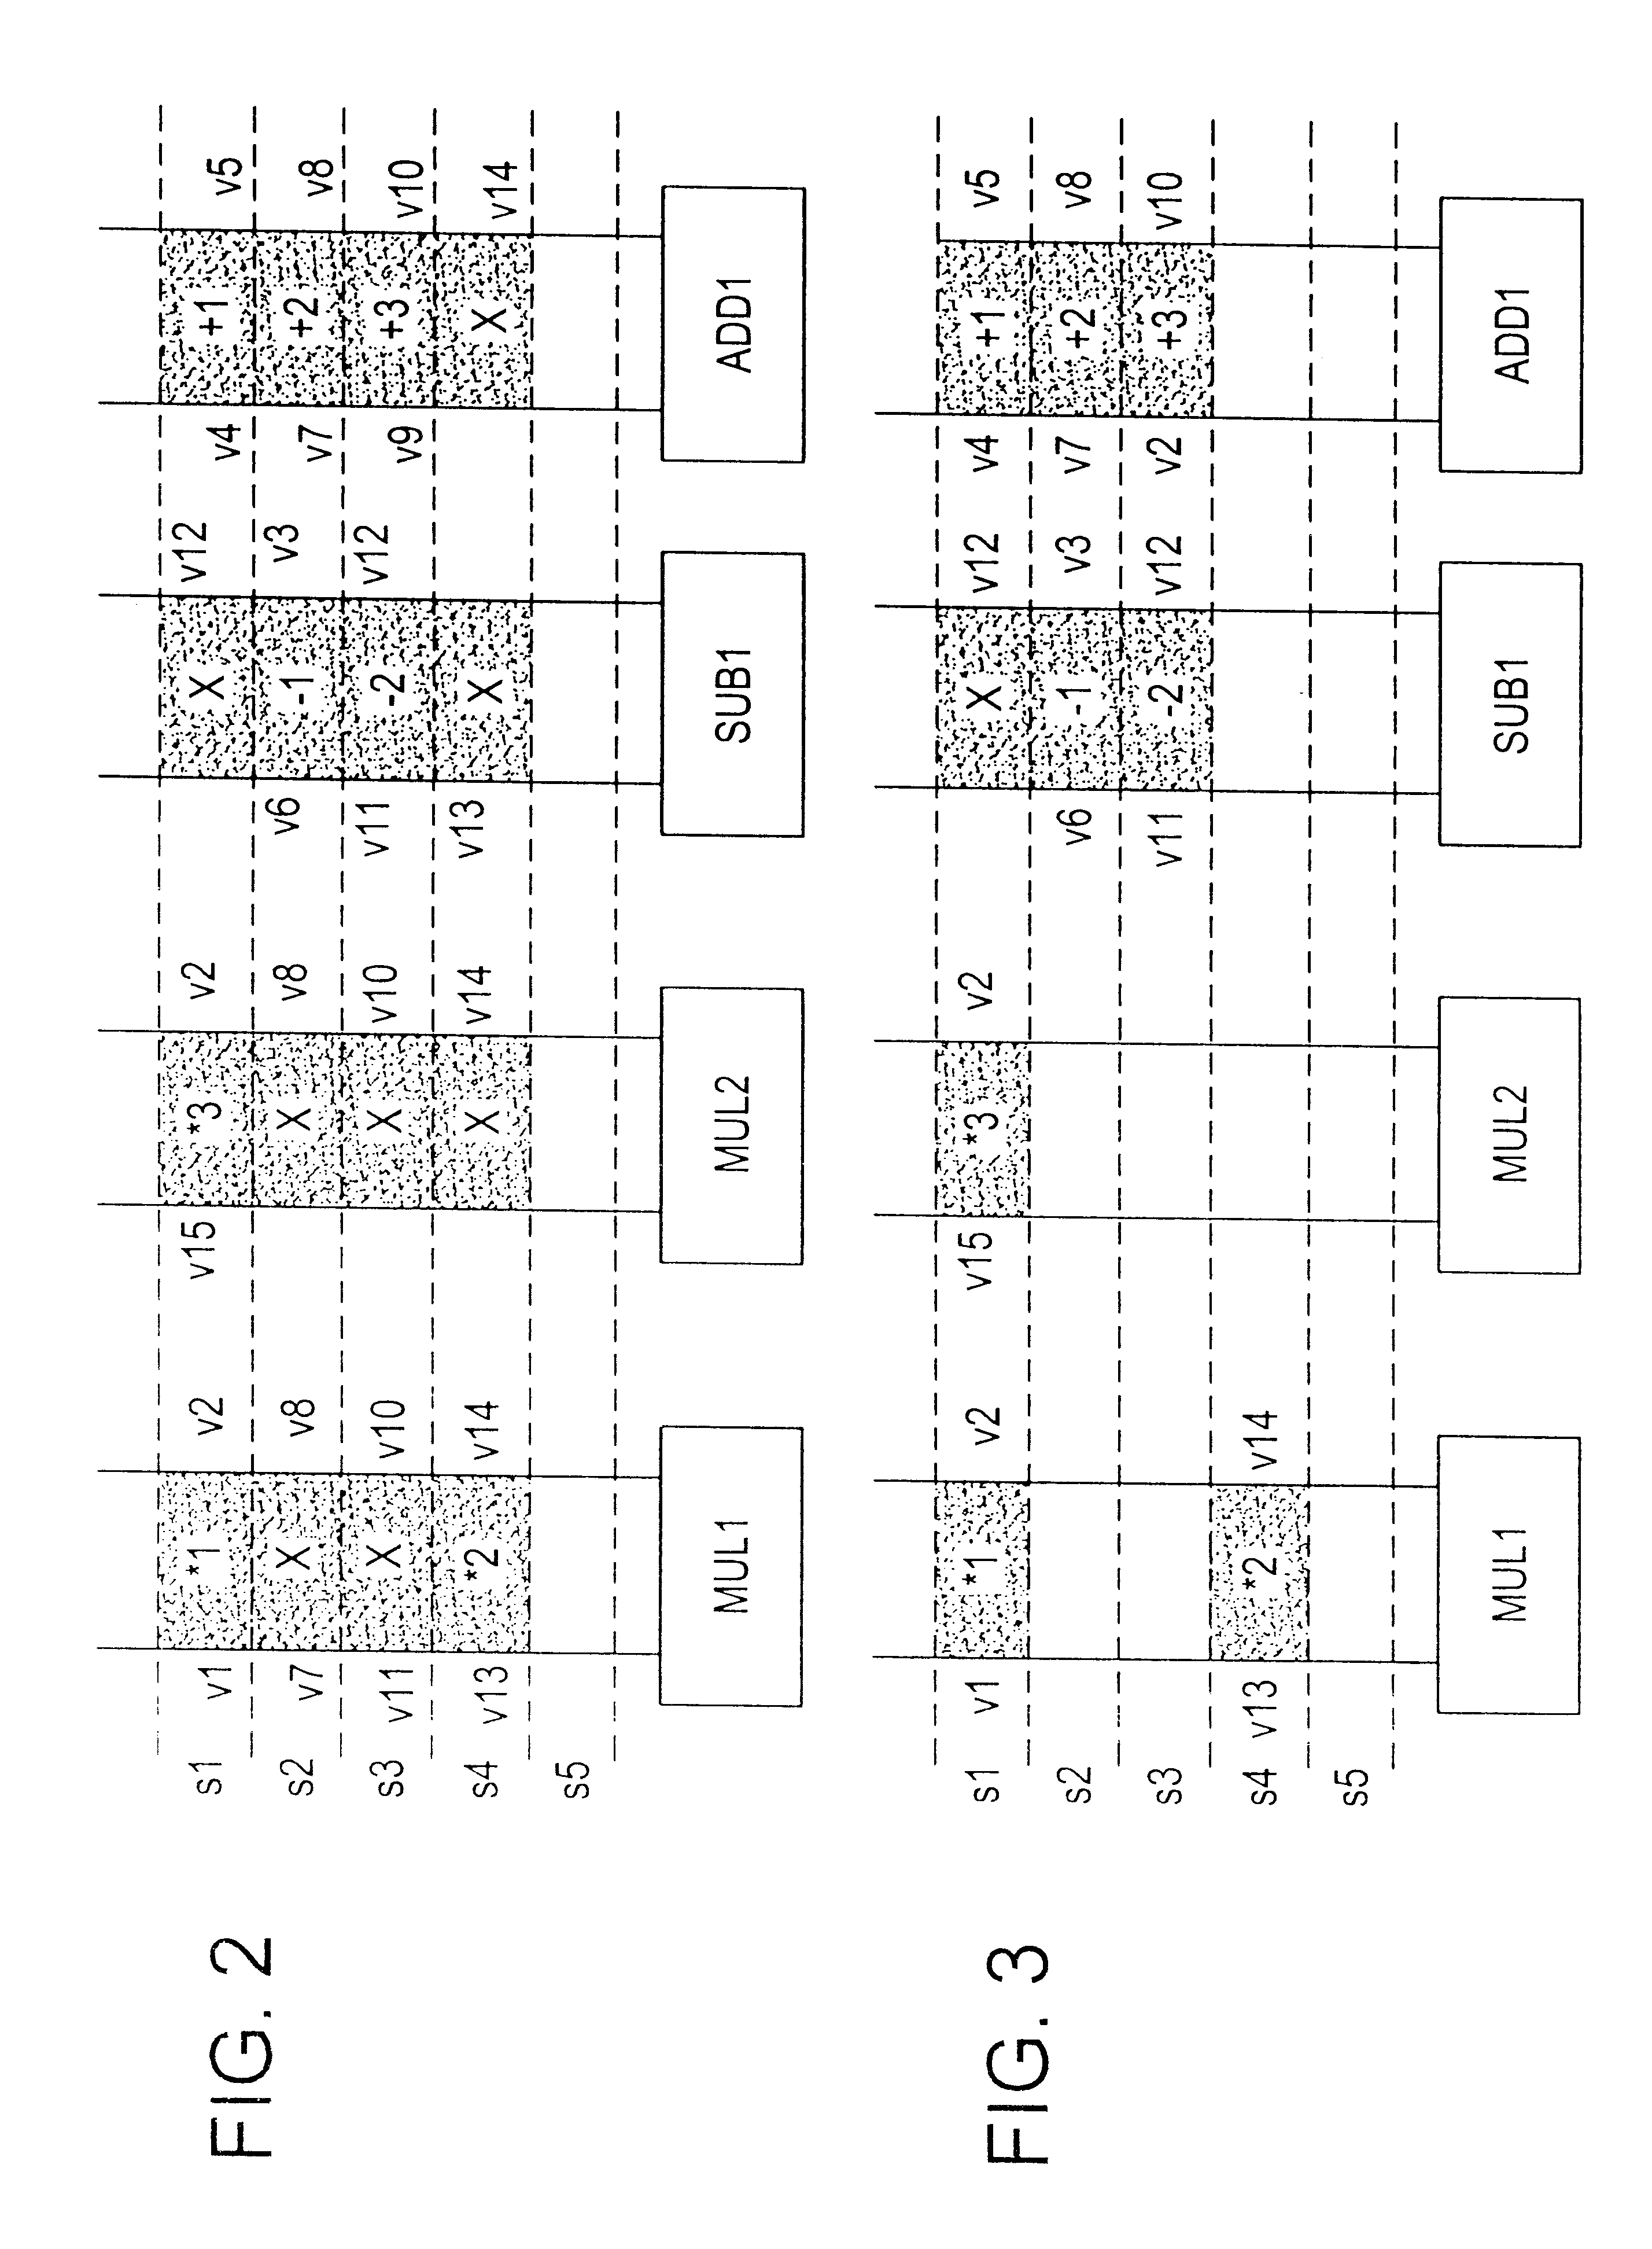 Constrained register sharing technique for low power VLSI design